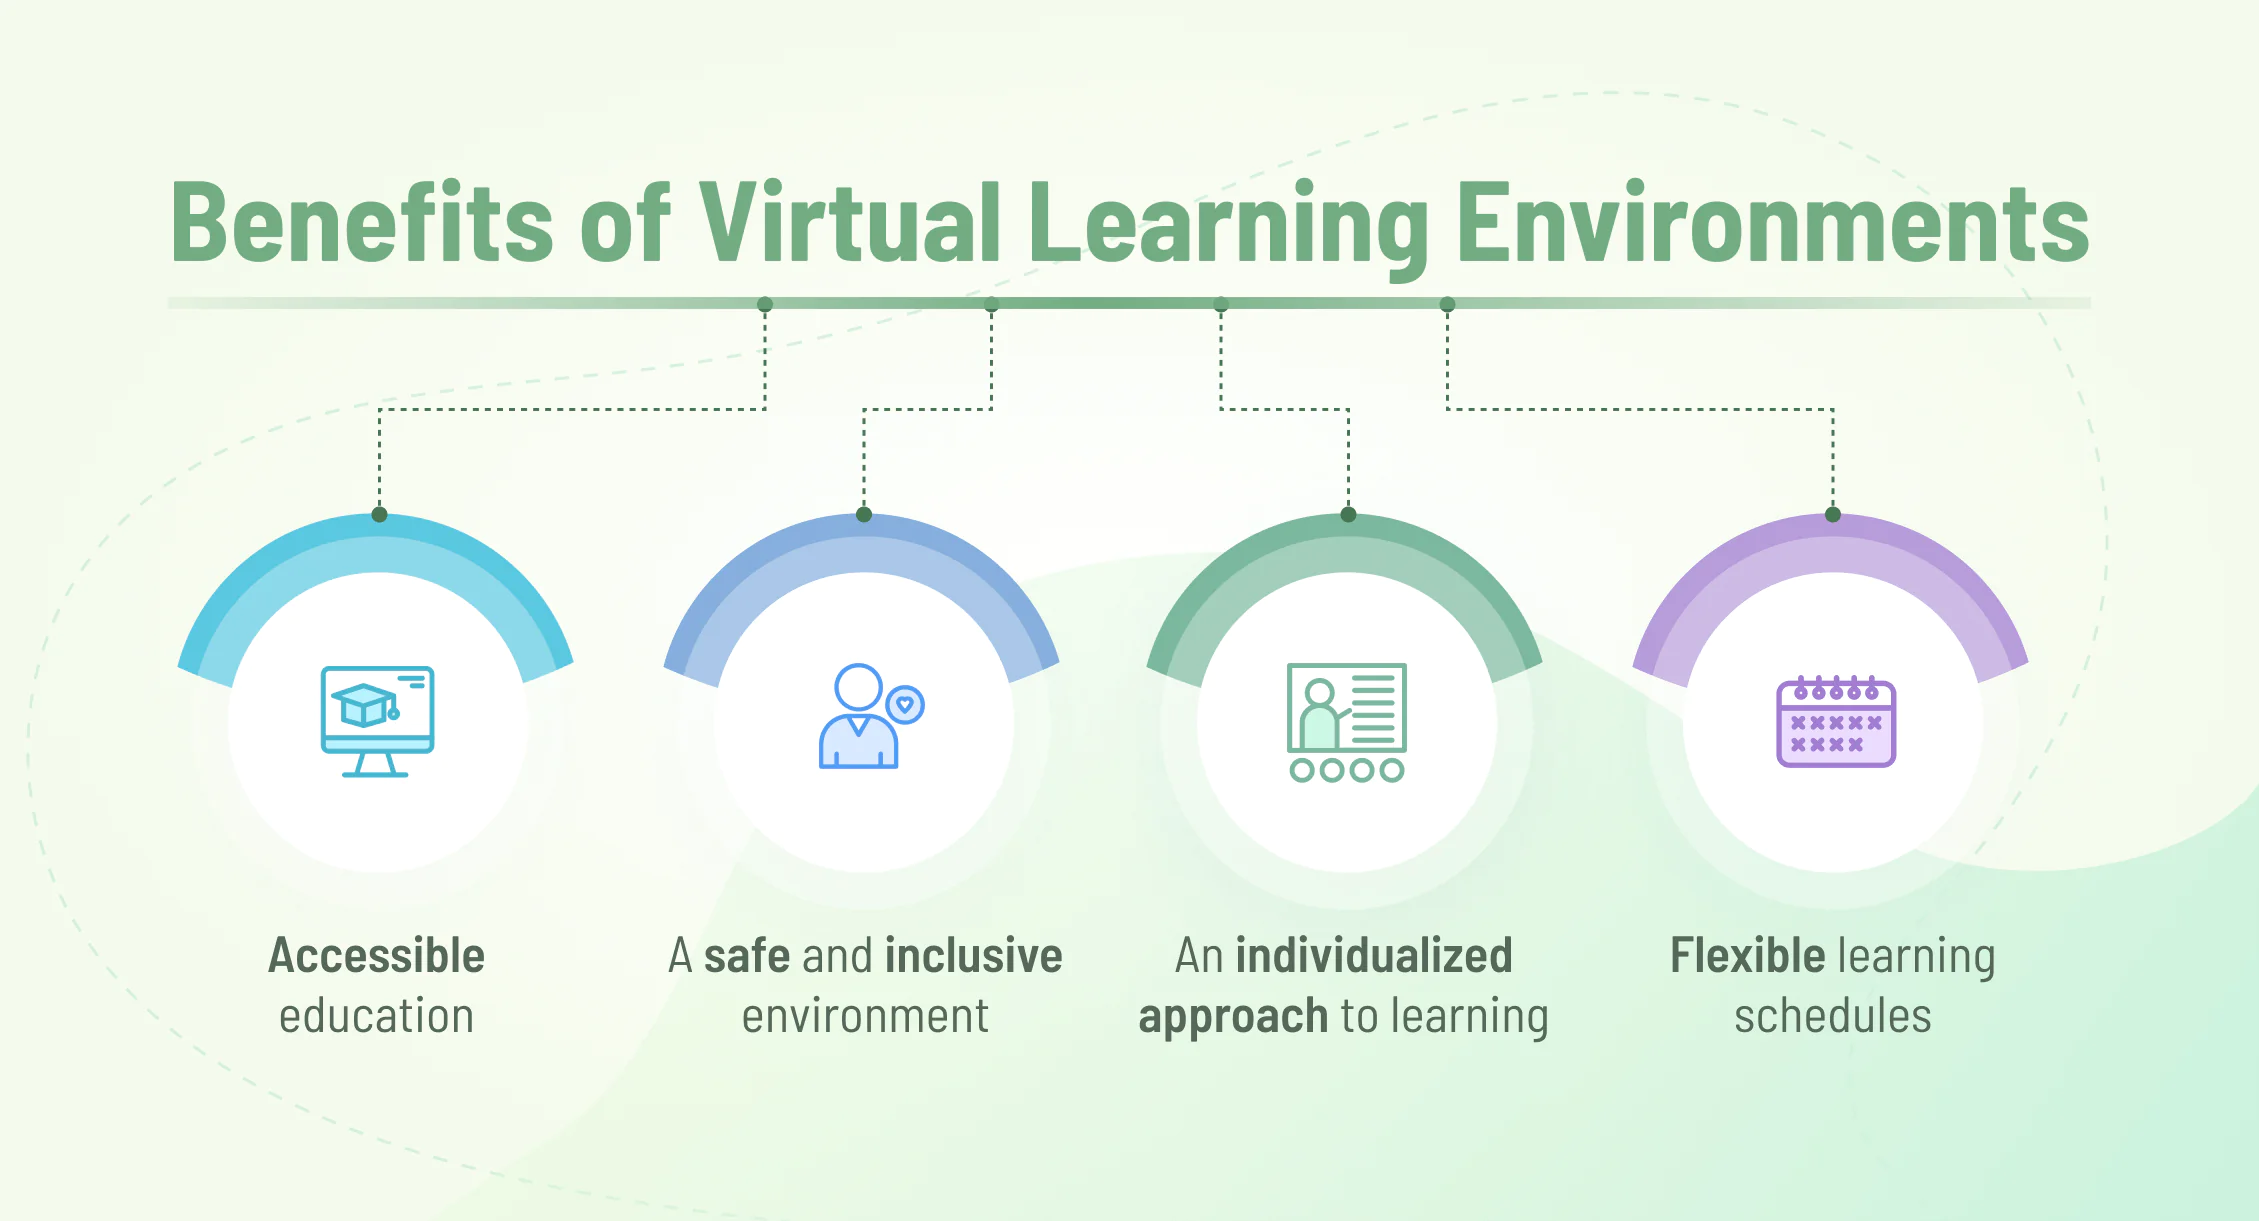 Benefits of Virtual Learning Environments